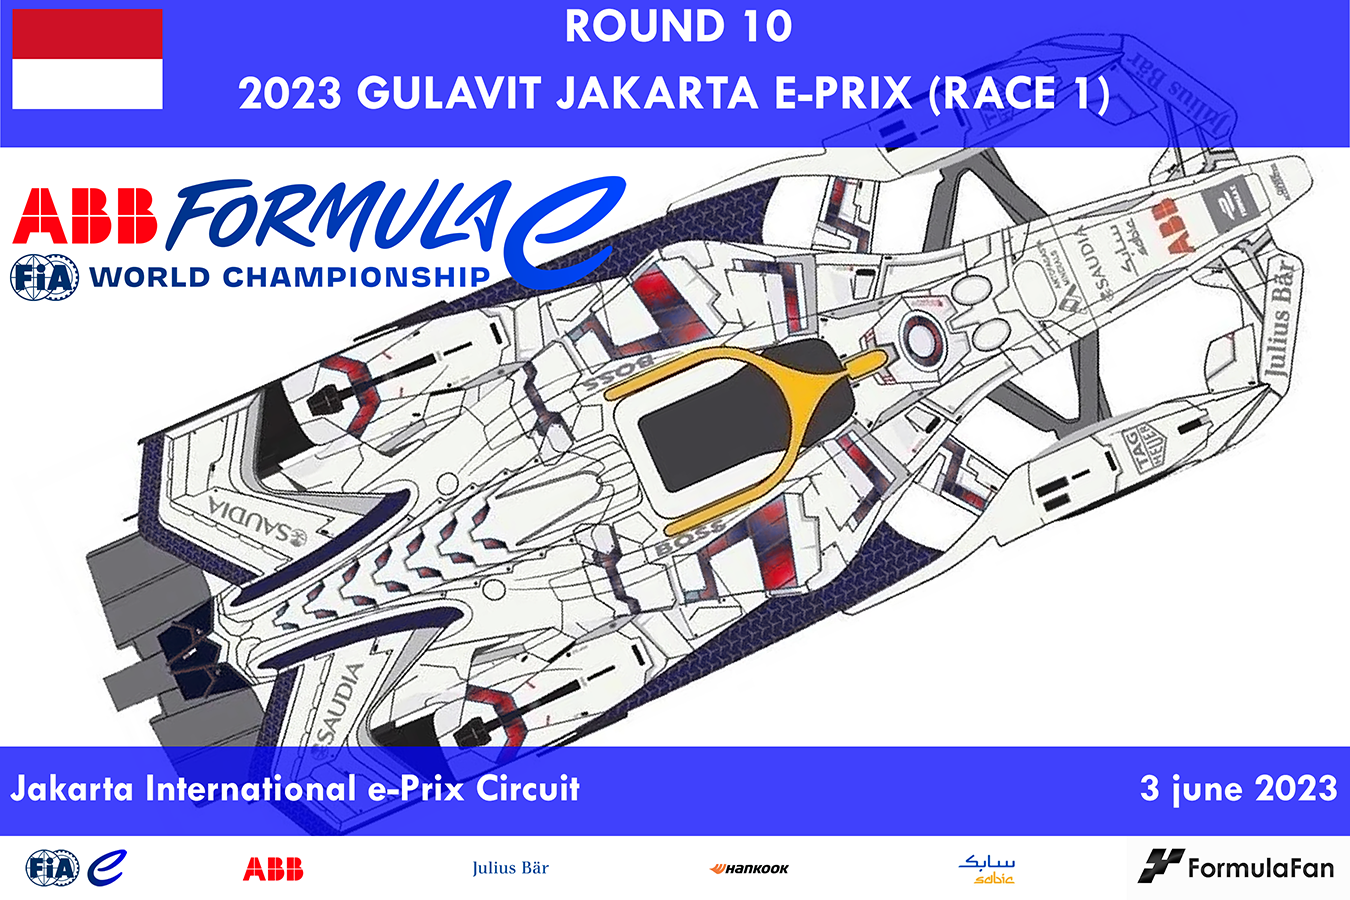 E-Prix Джакарты 2023 (гонка 1) | 2023 AAB FIA Formula E Gulavit Jakarta E-Prix Race 1